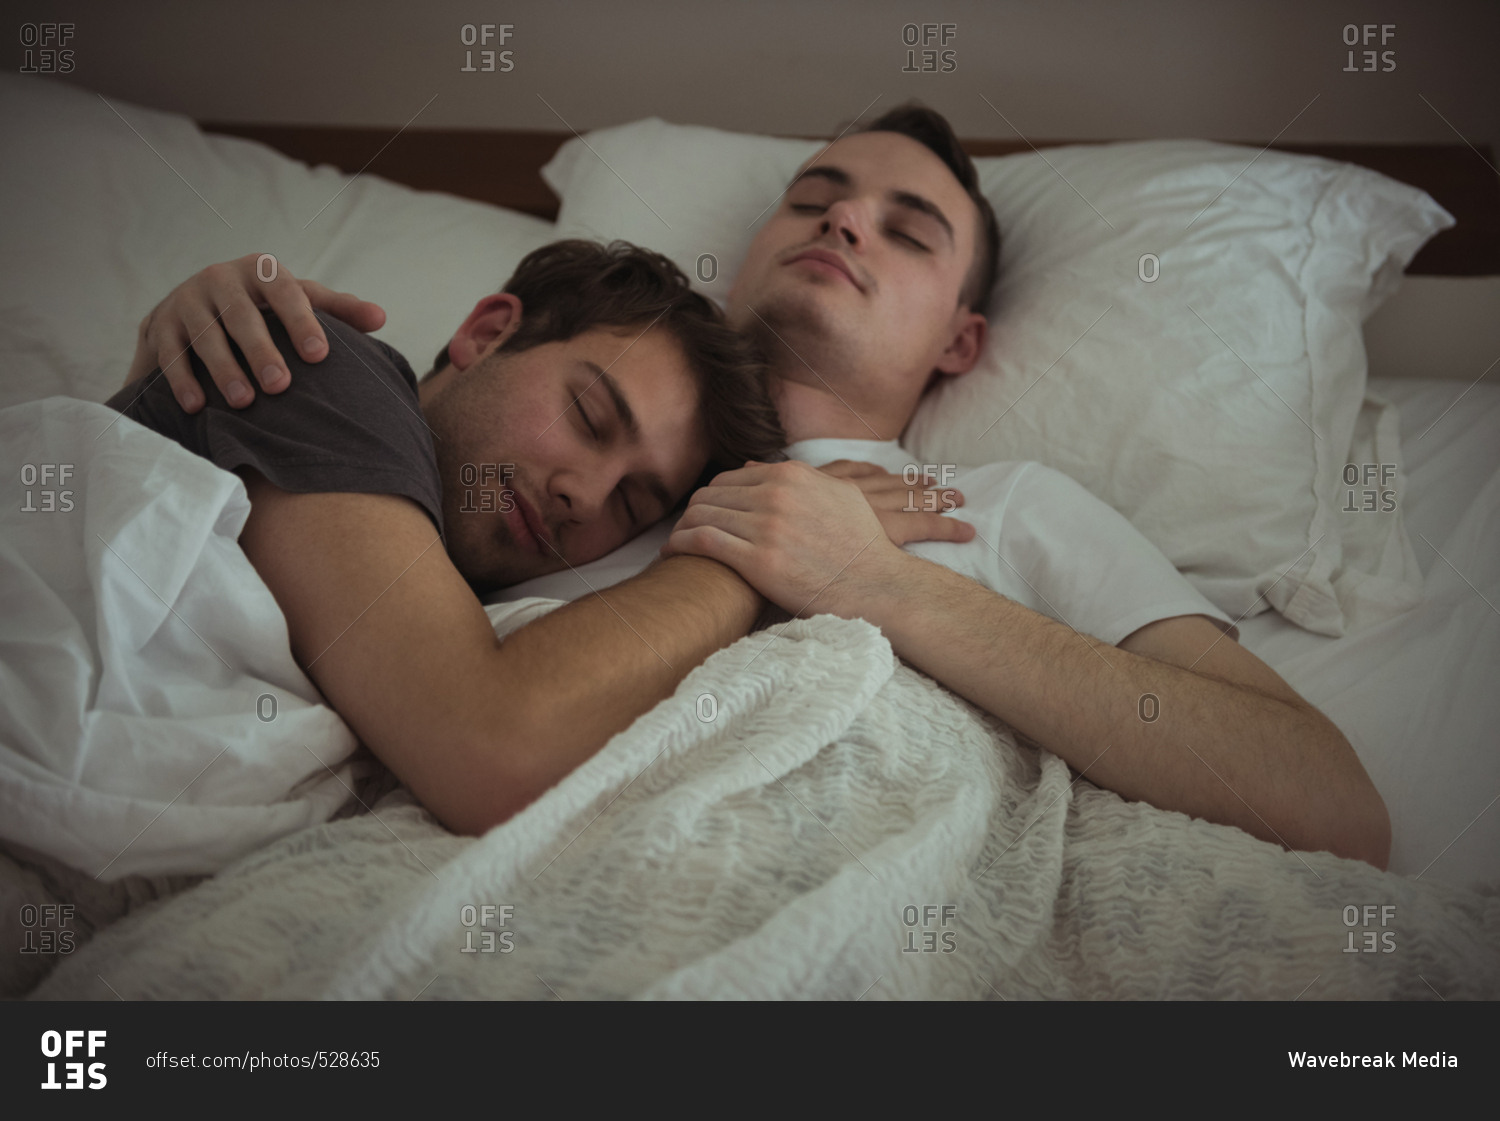 molested while sleeping gay porn tumblr